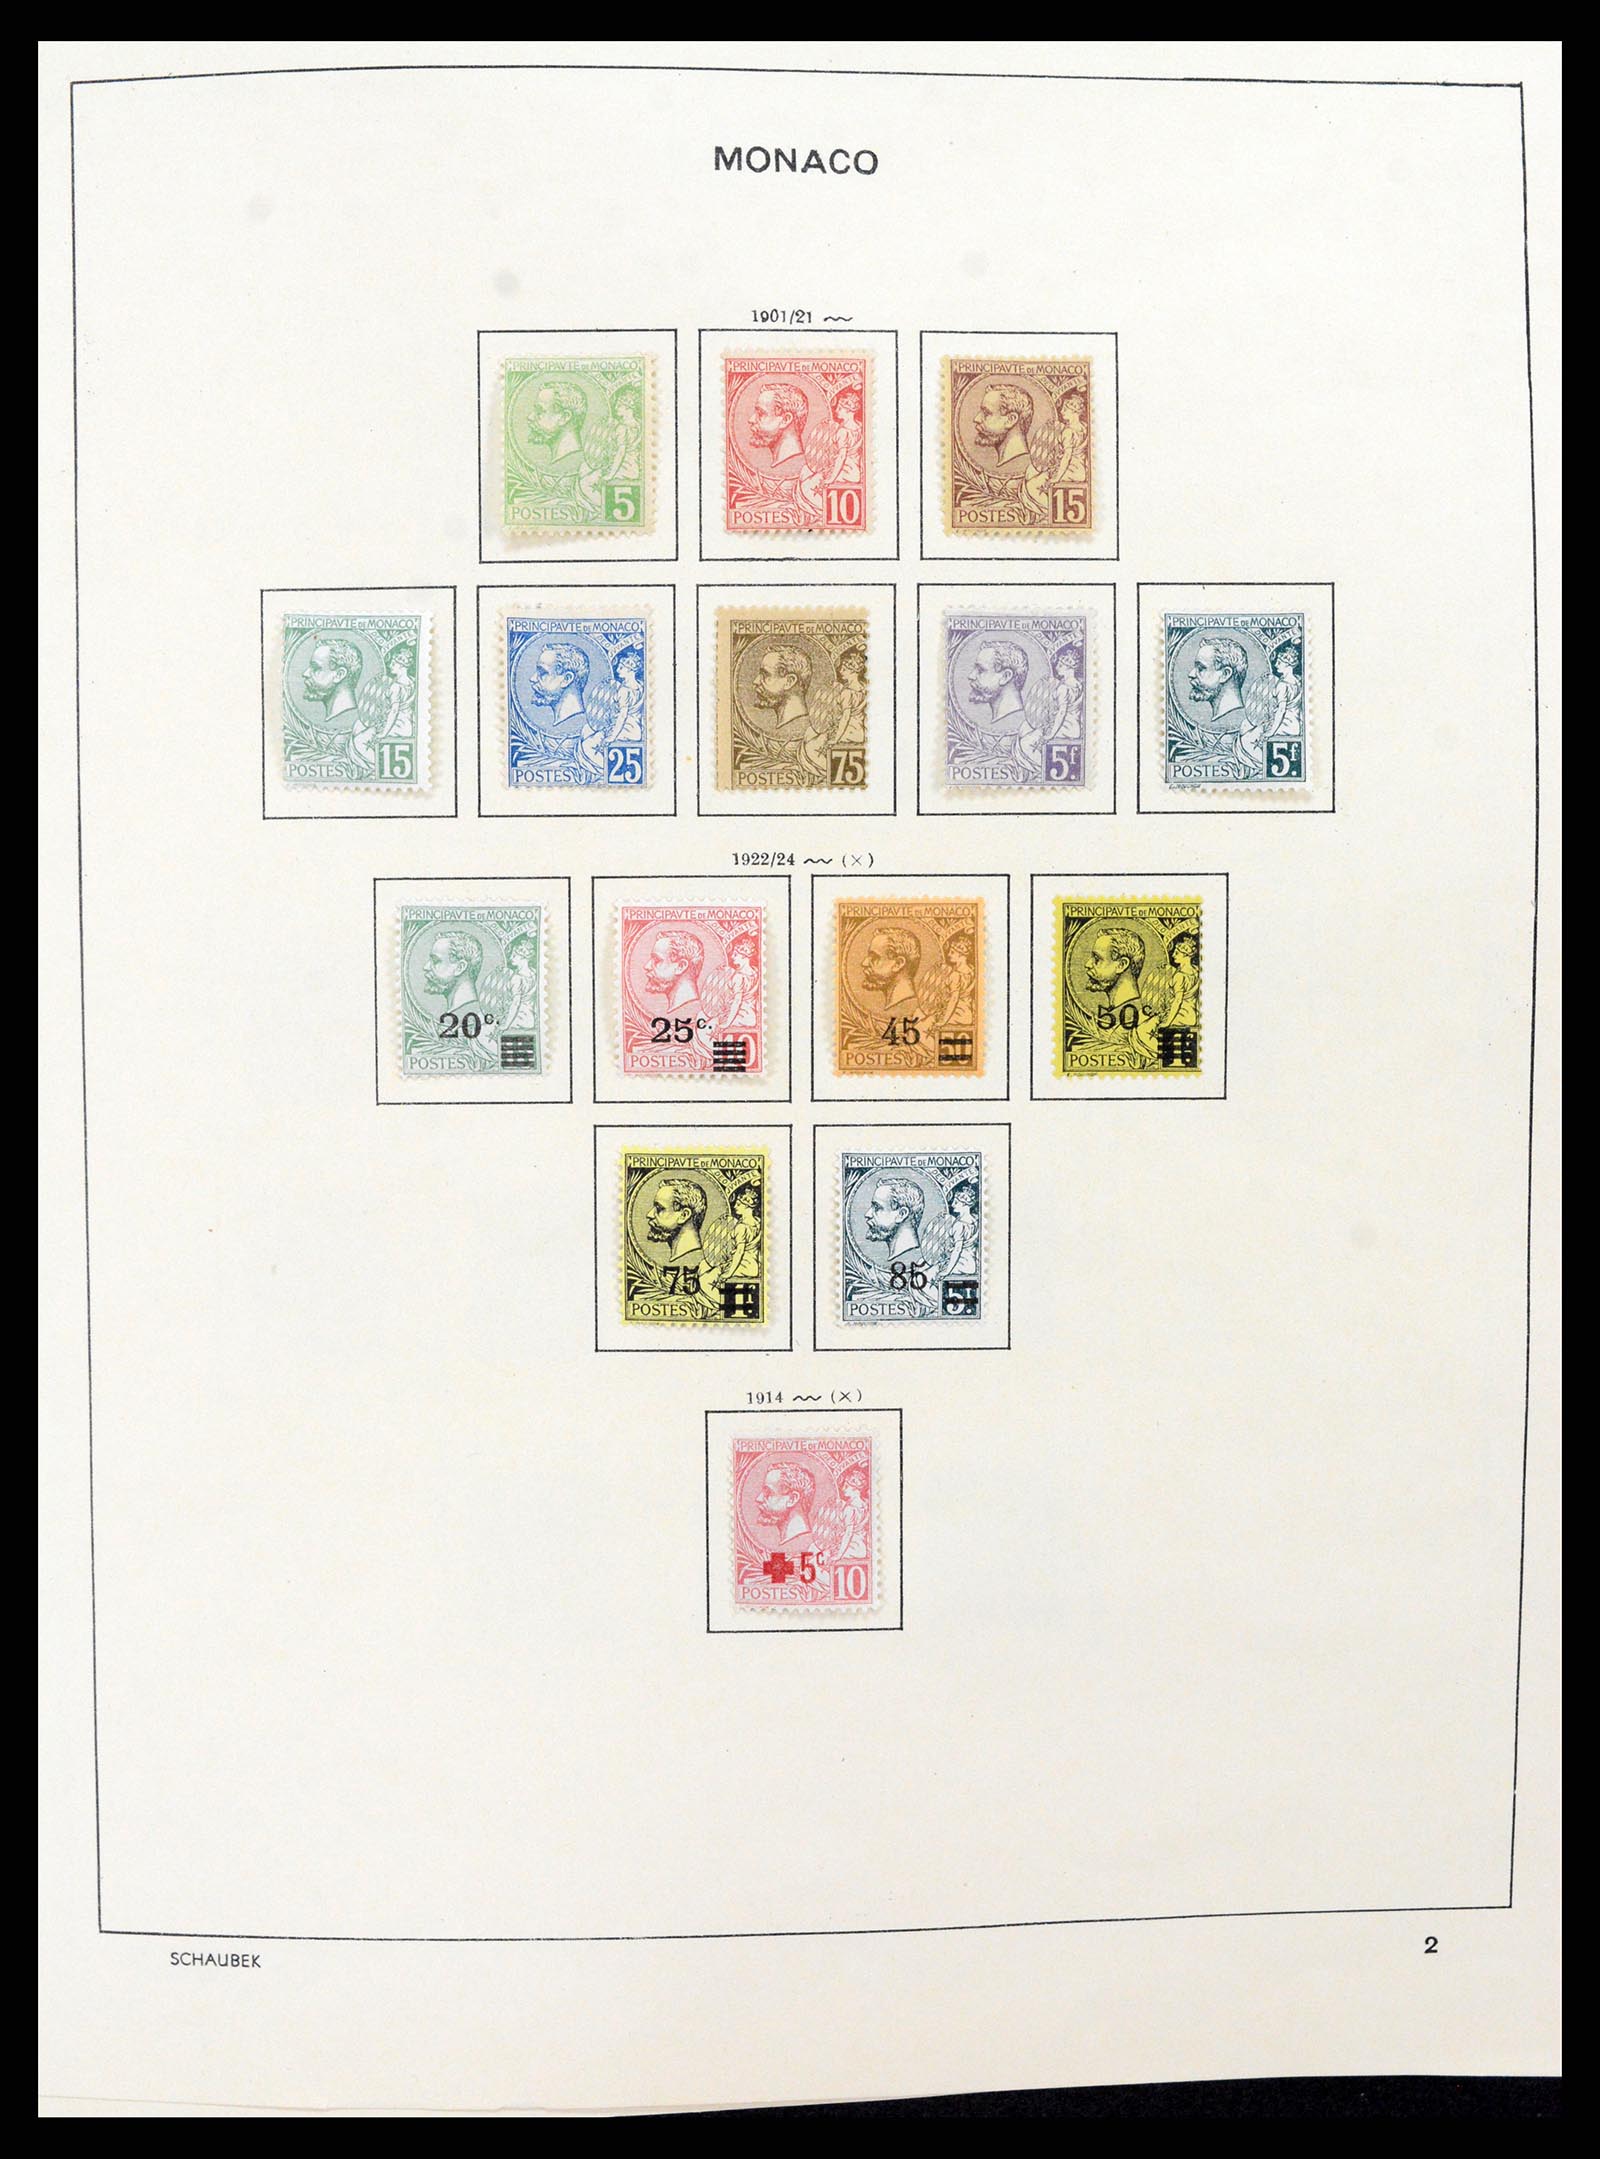 37570 002 - Stamp collection 37570 Monaco 1885-2013.